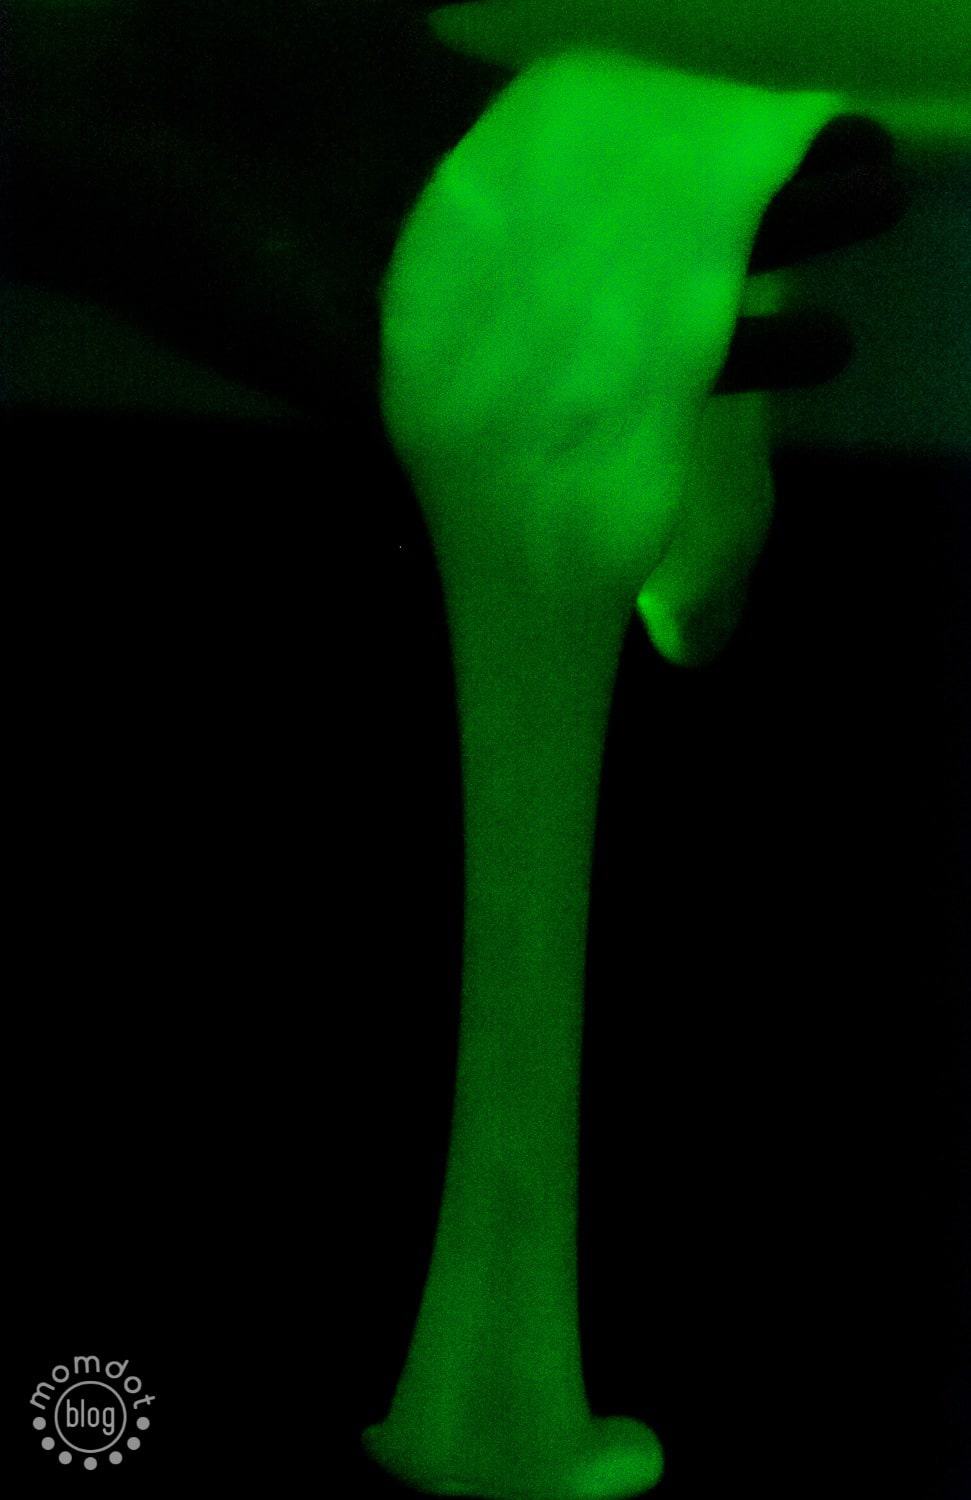 Glow in the dark slime